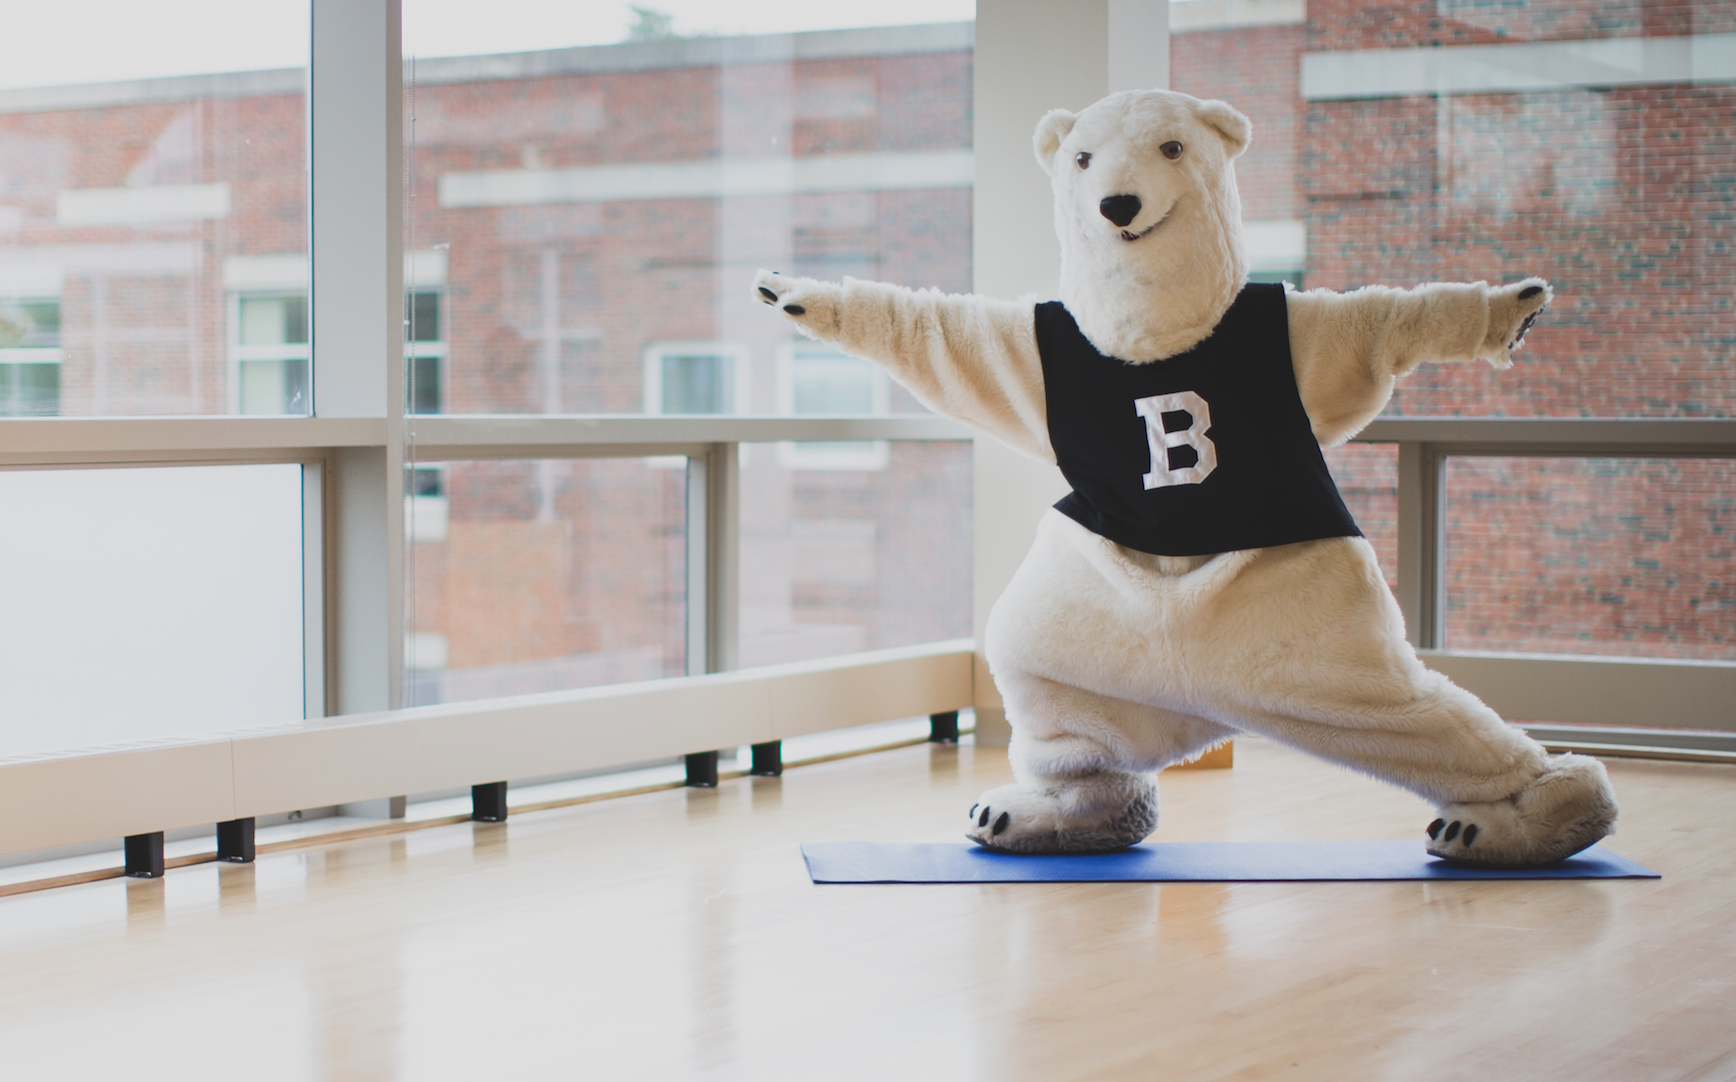 The polar bear does some yoga at the Buck Center.